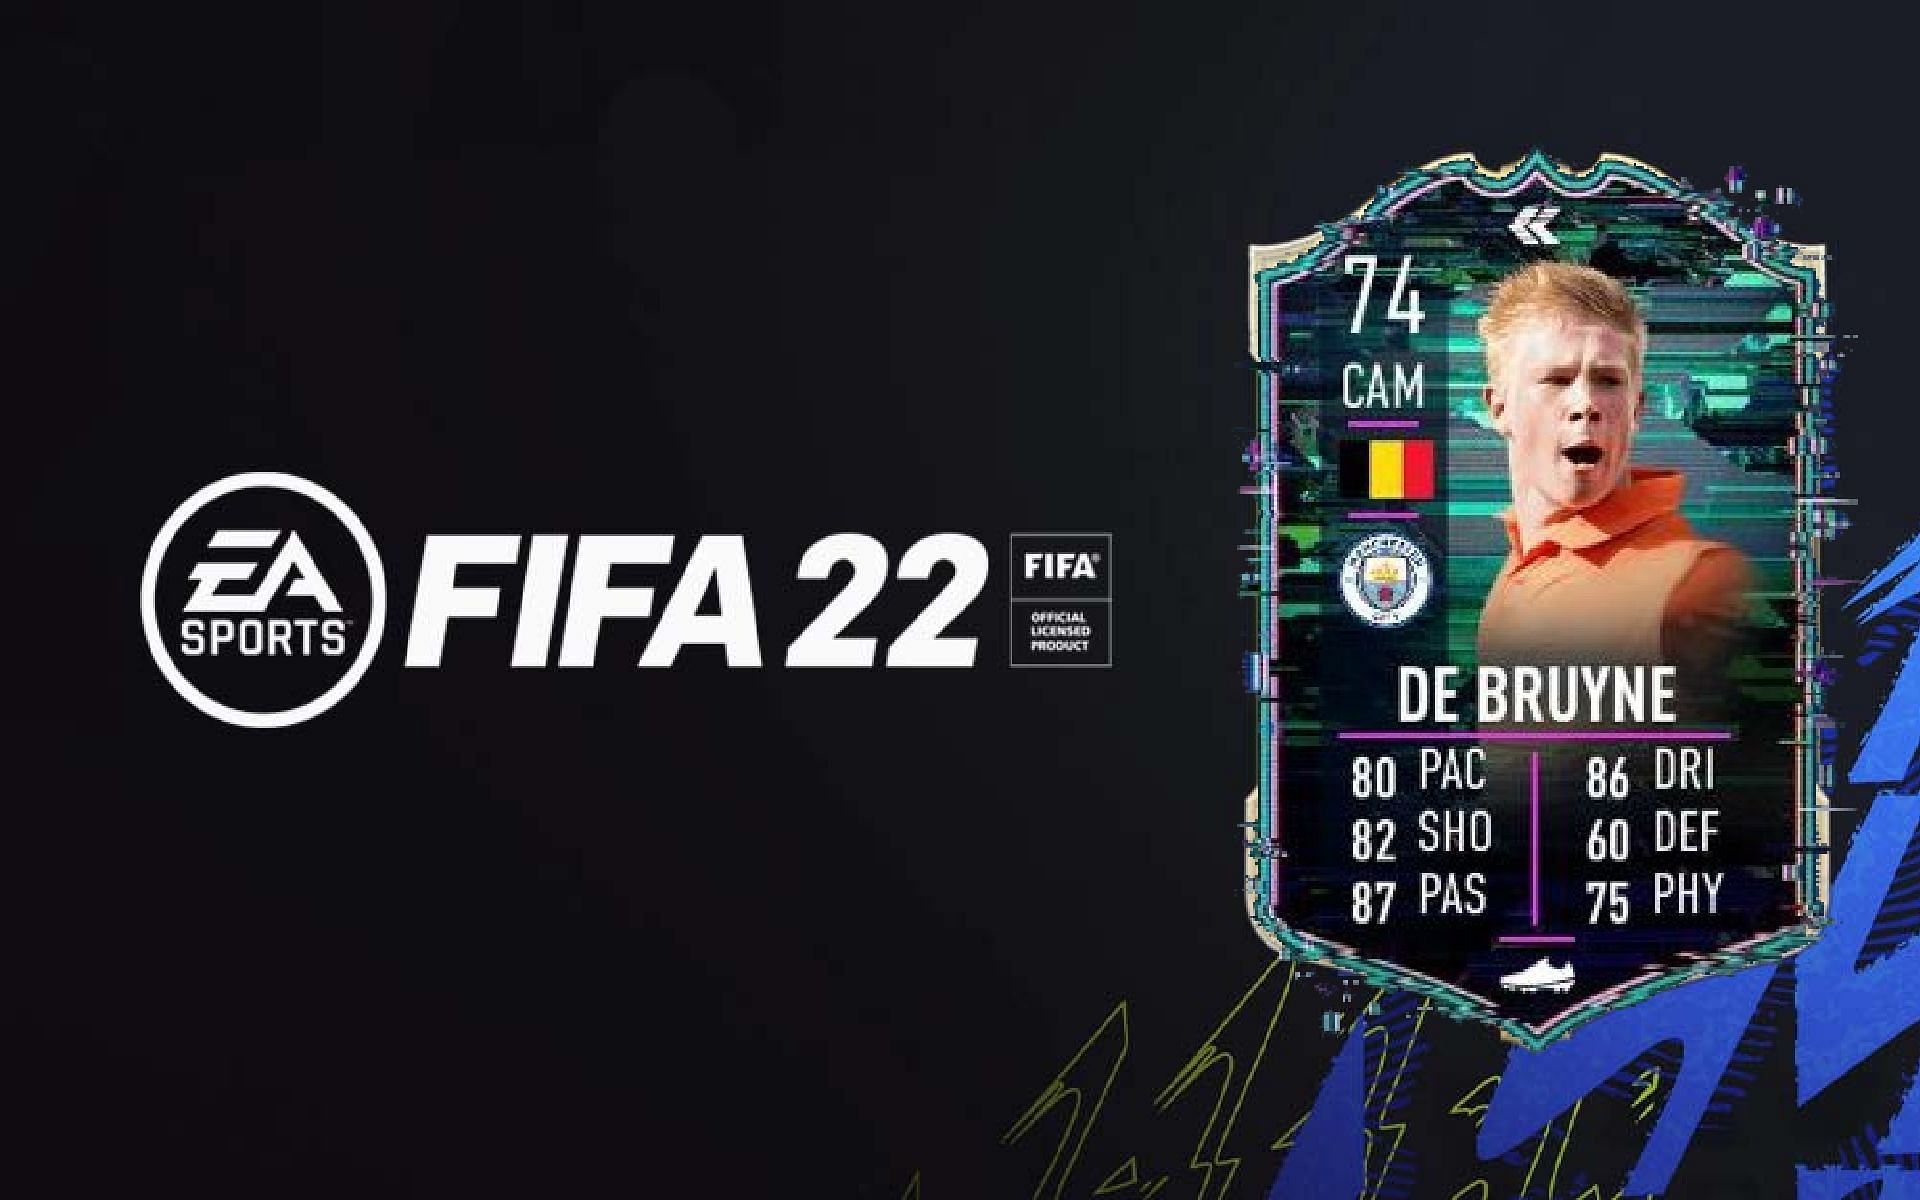 Kevin De Bruyne Flashback card in FIFA Ultimate Team (Image via Sportskeeda)